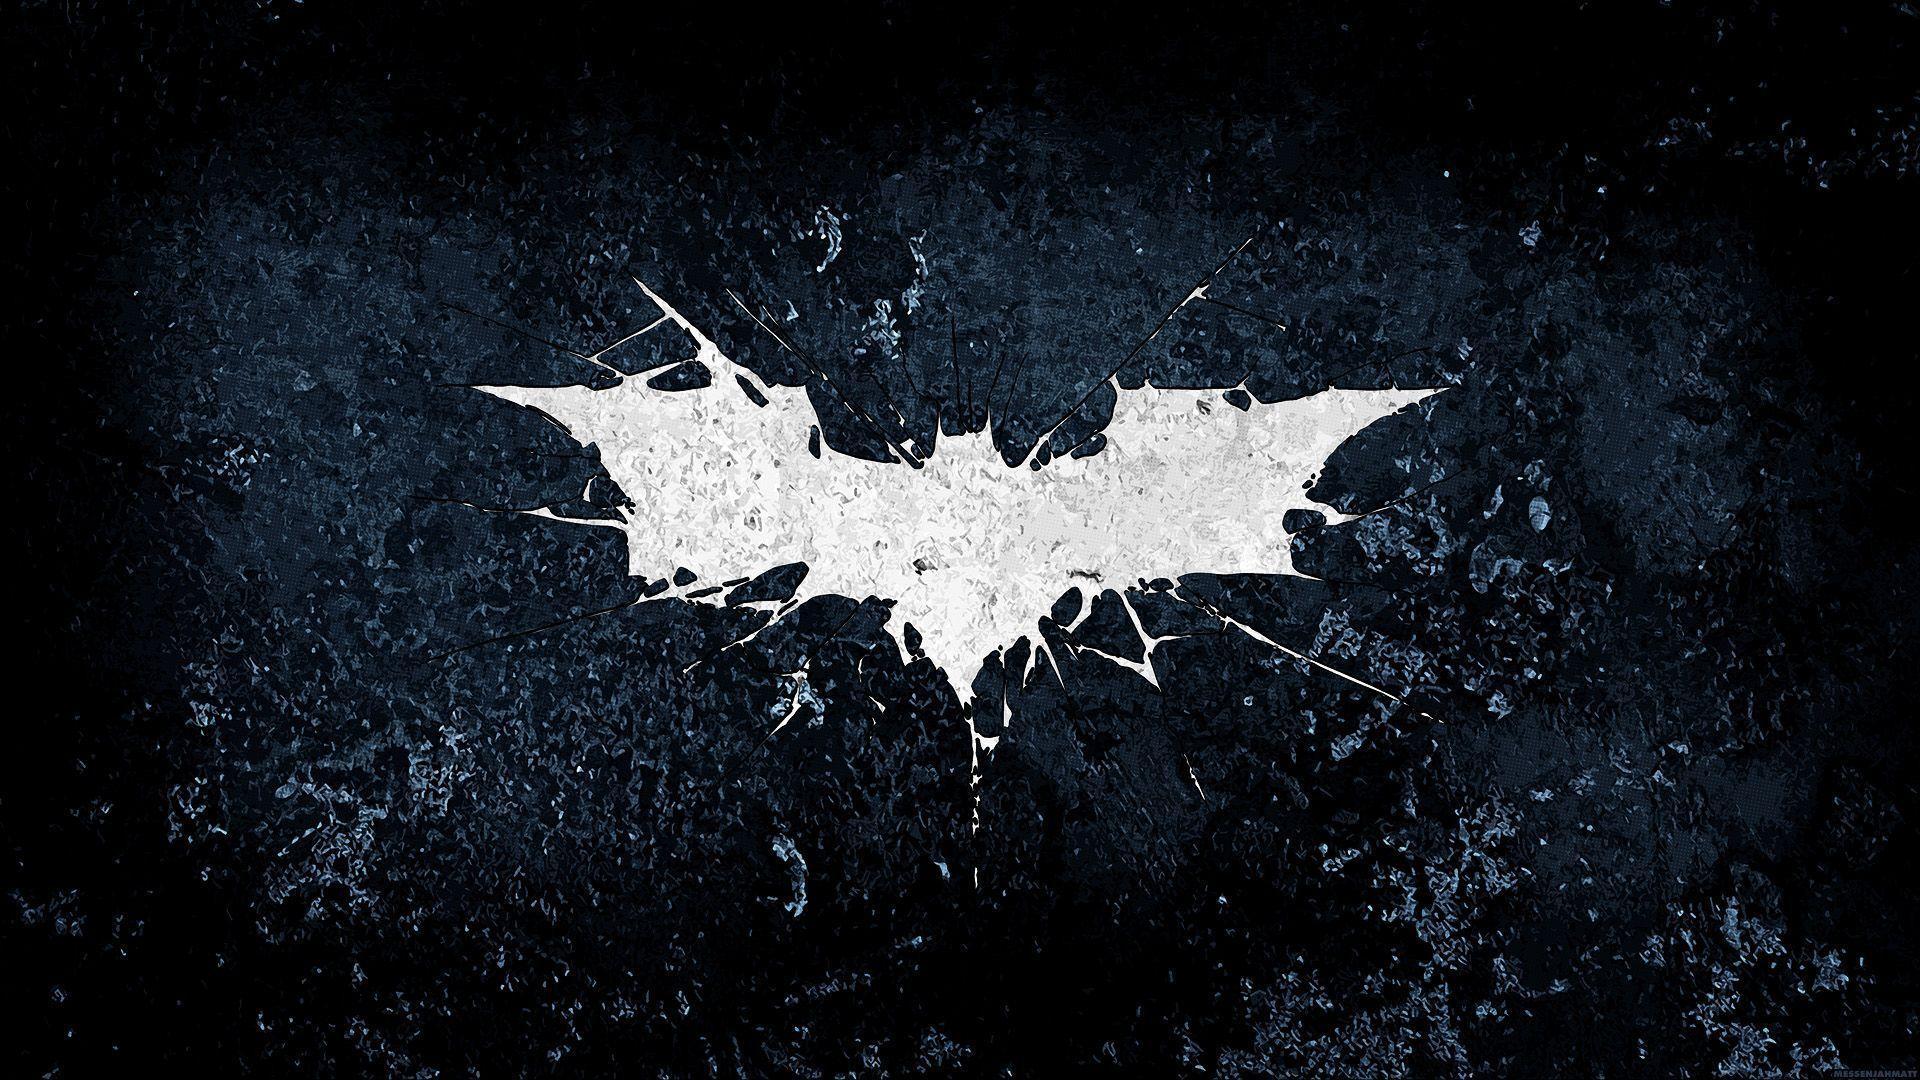 Batman The Dark Knight 2008 1080p torrent download free